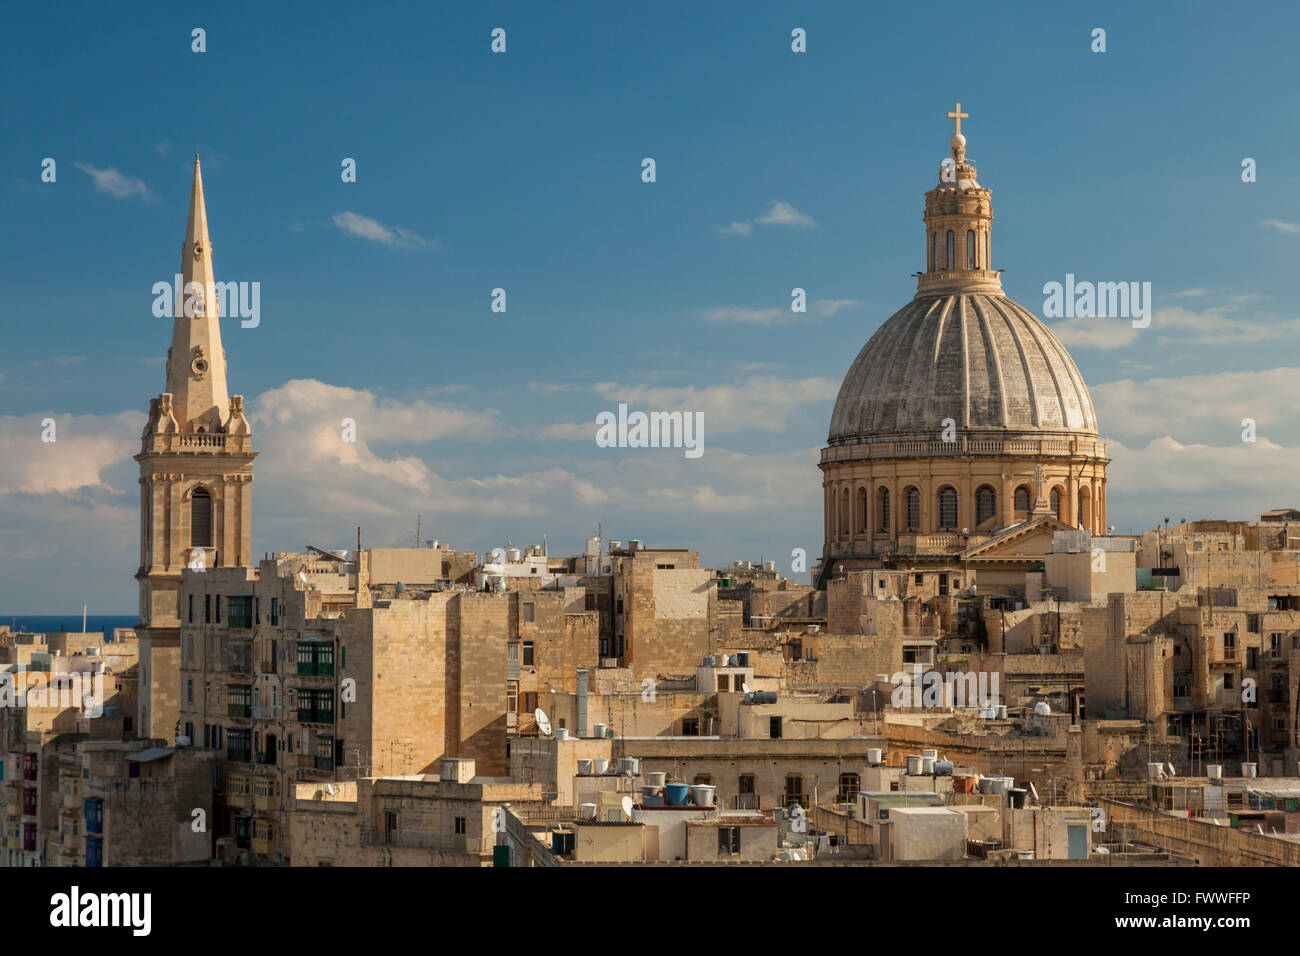 Skyline of Valletta, Malta. Iconic Carmelite church dome. Stock Photo